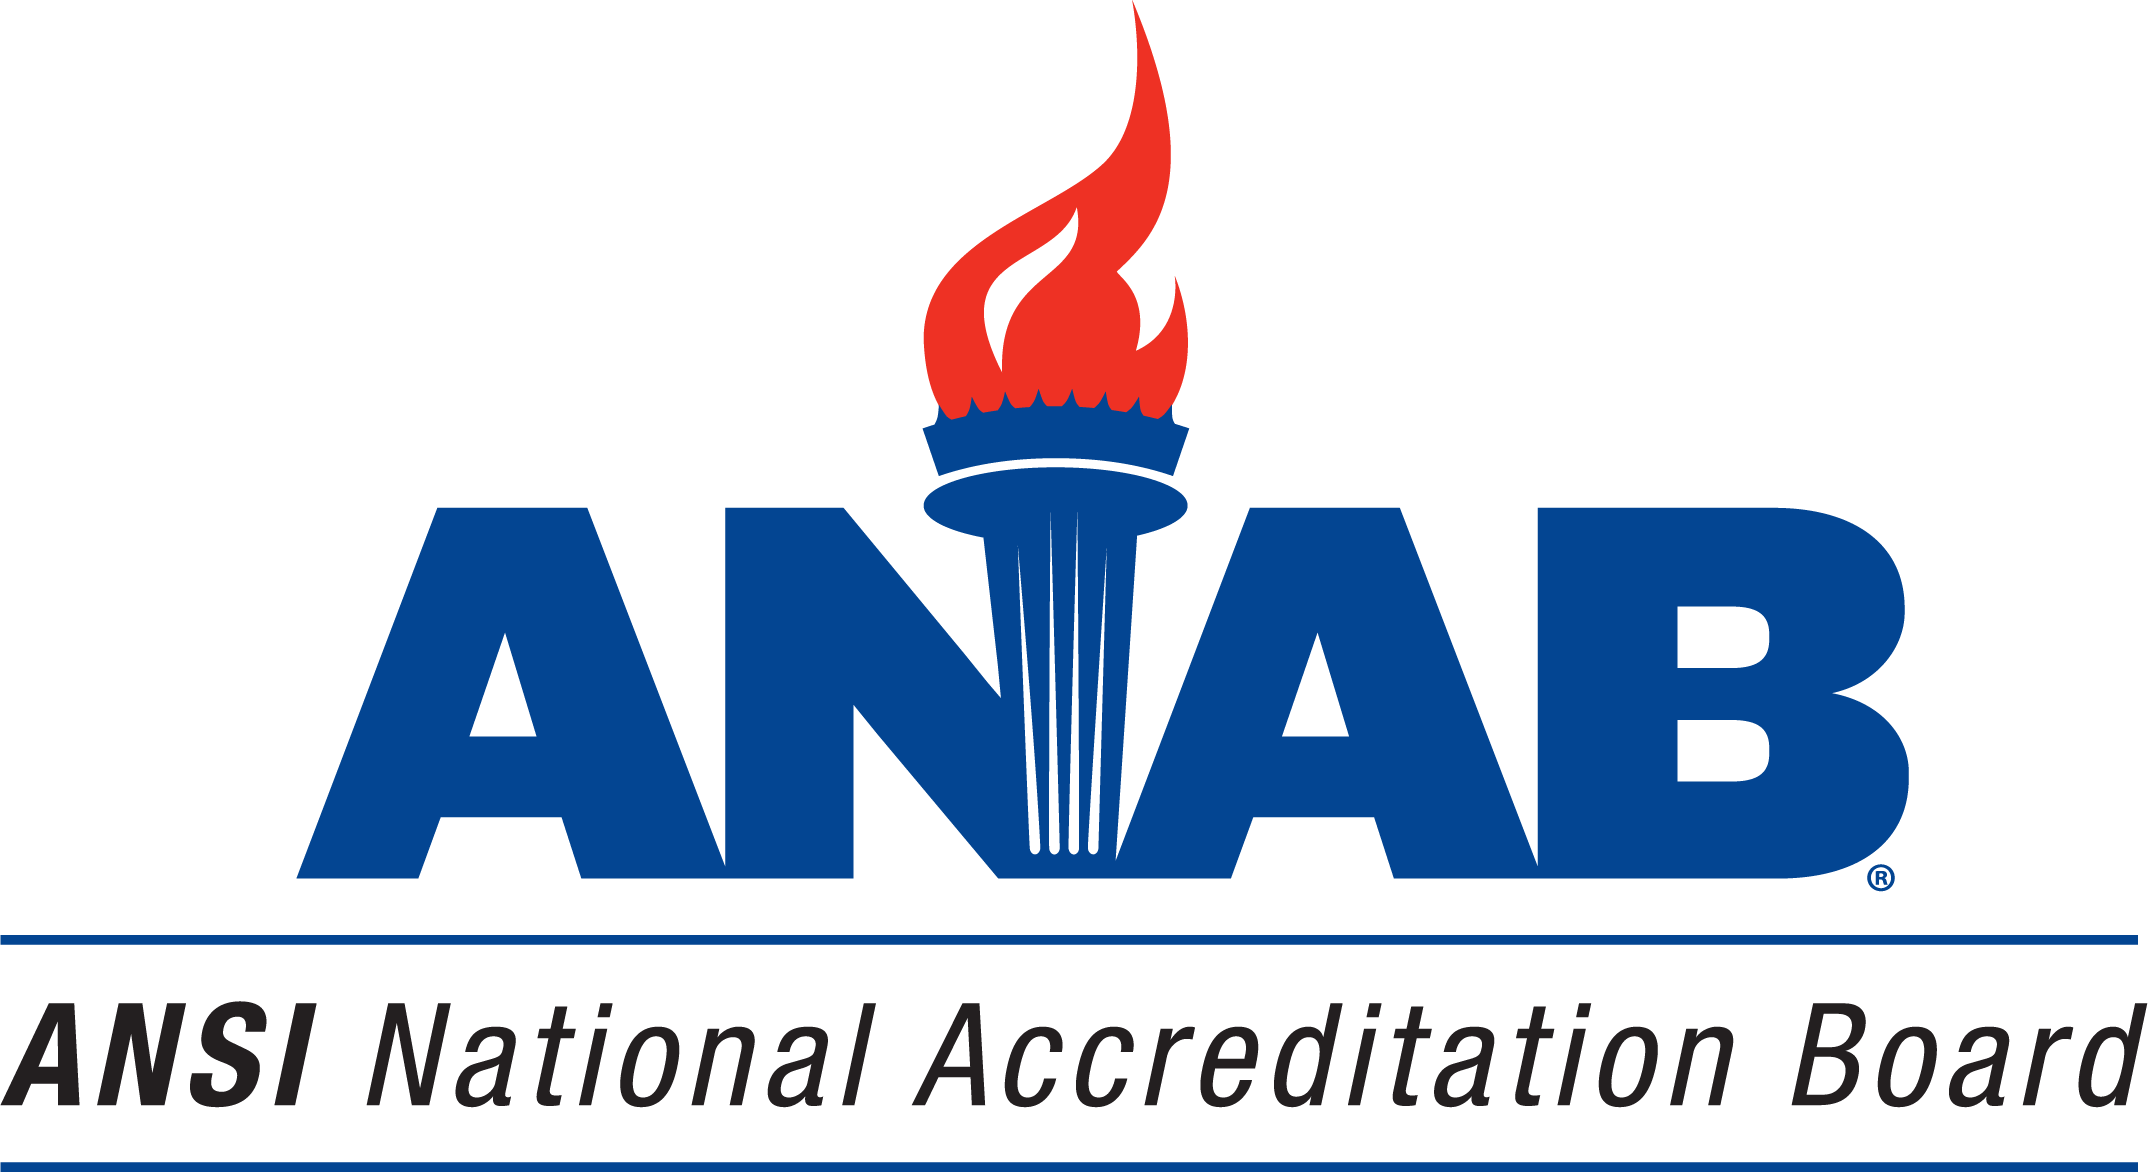 Estados Unidos de América - ANSI National Accreditation Board, LLC. (ANAB)